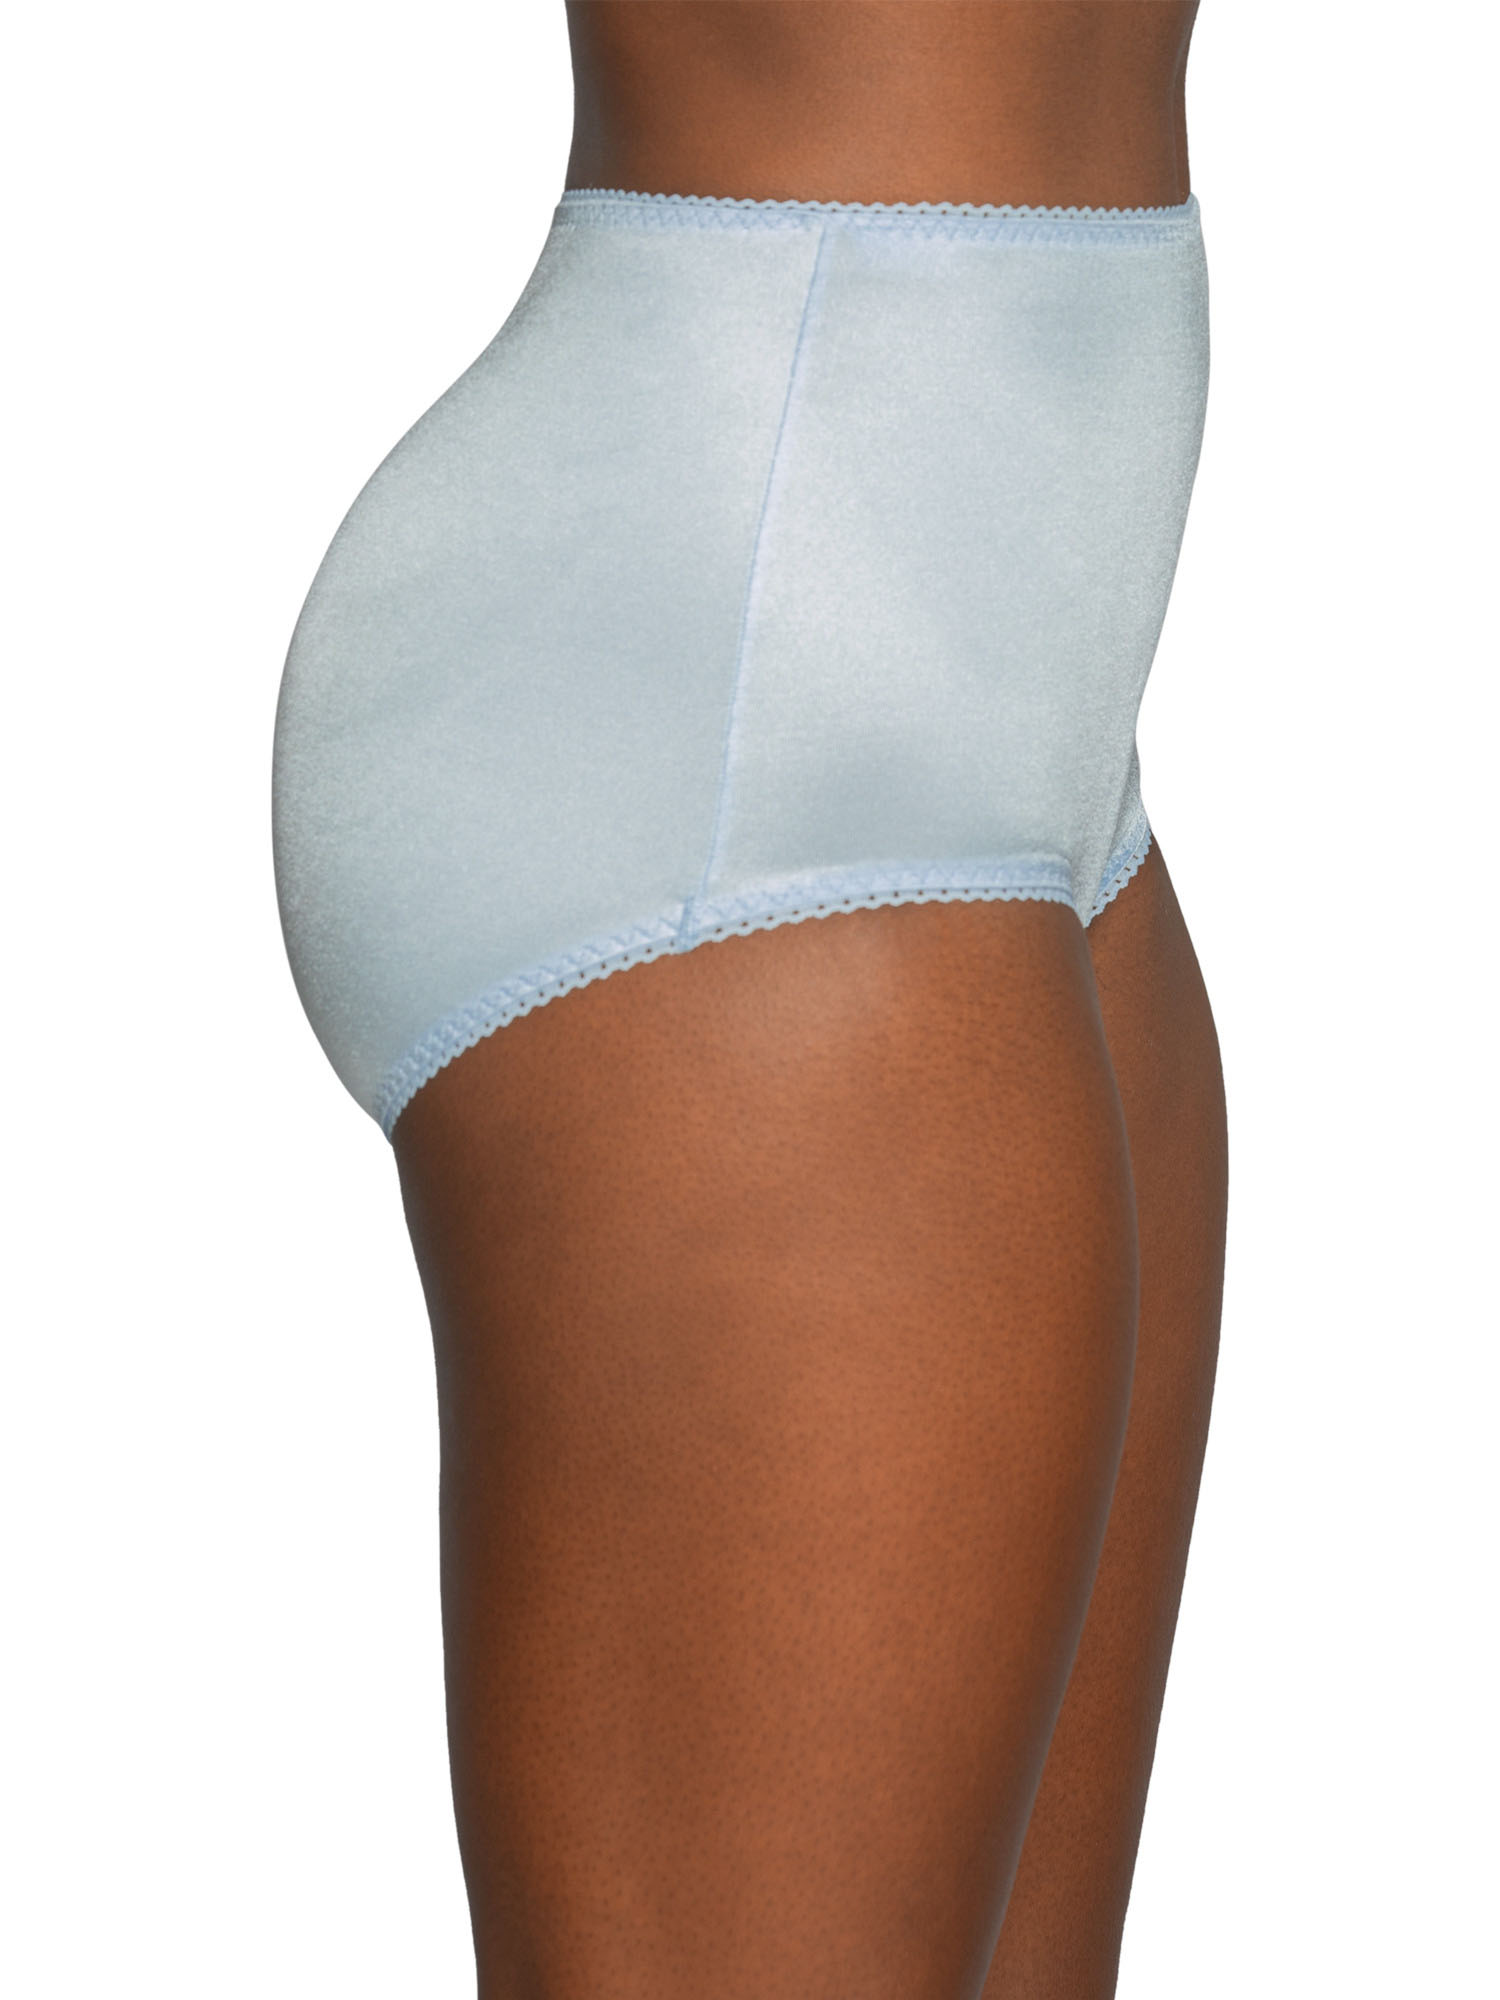 Vanity Fair Radiant Collection Women's Undershapers Brief Underwear, 3 Pack - image 5 of 12